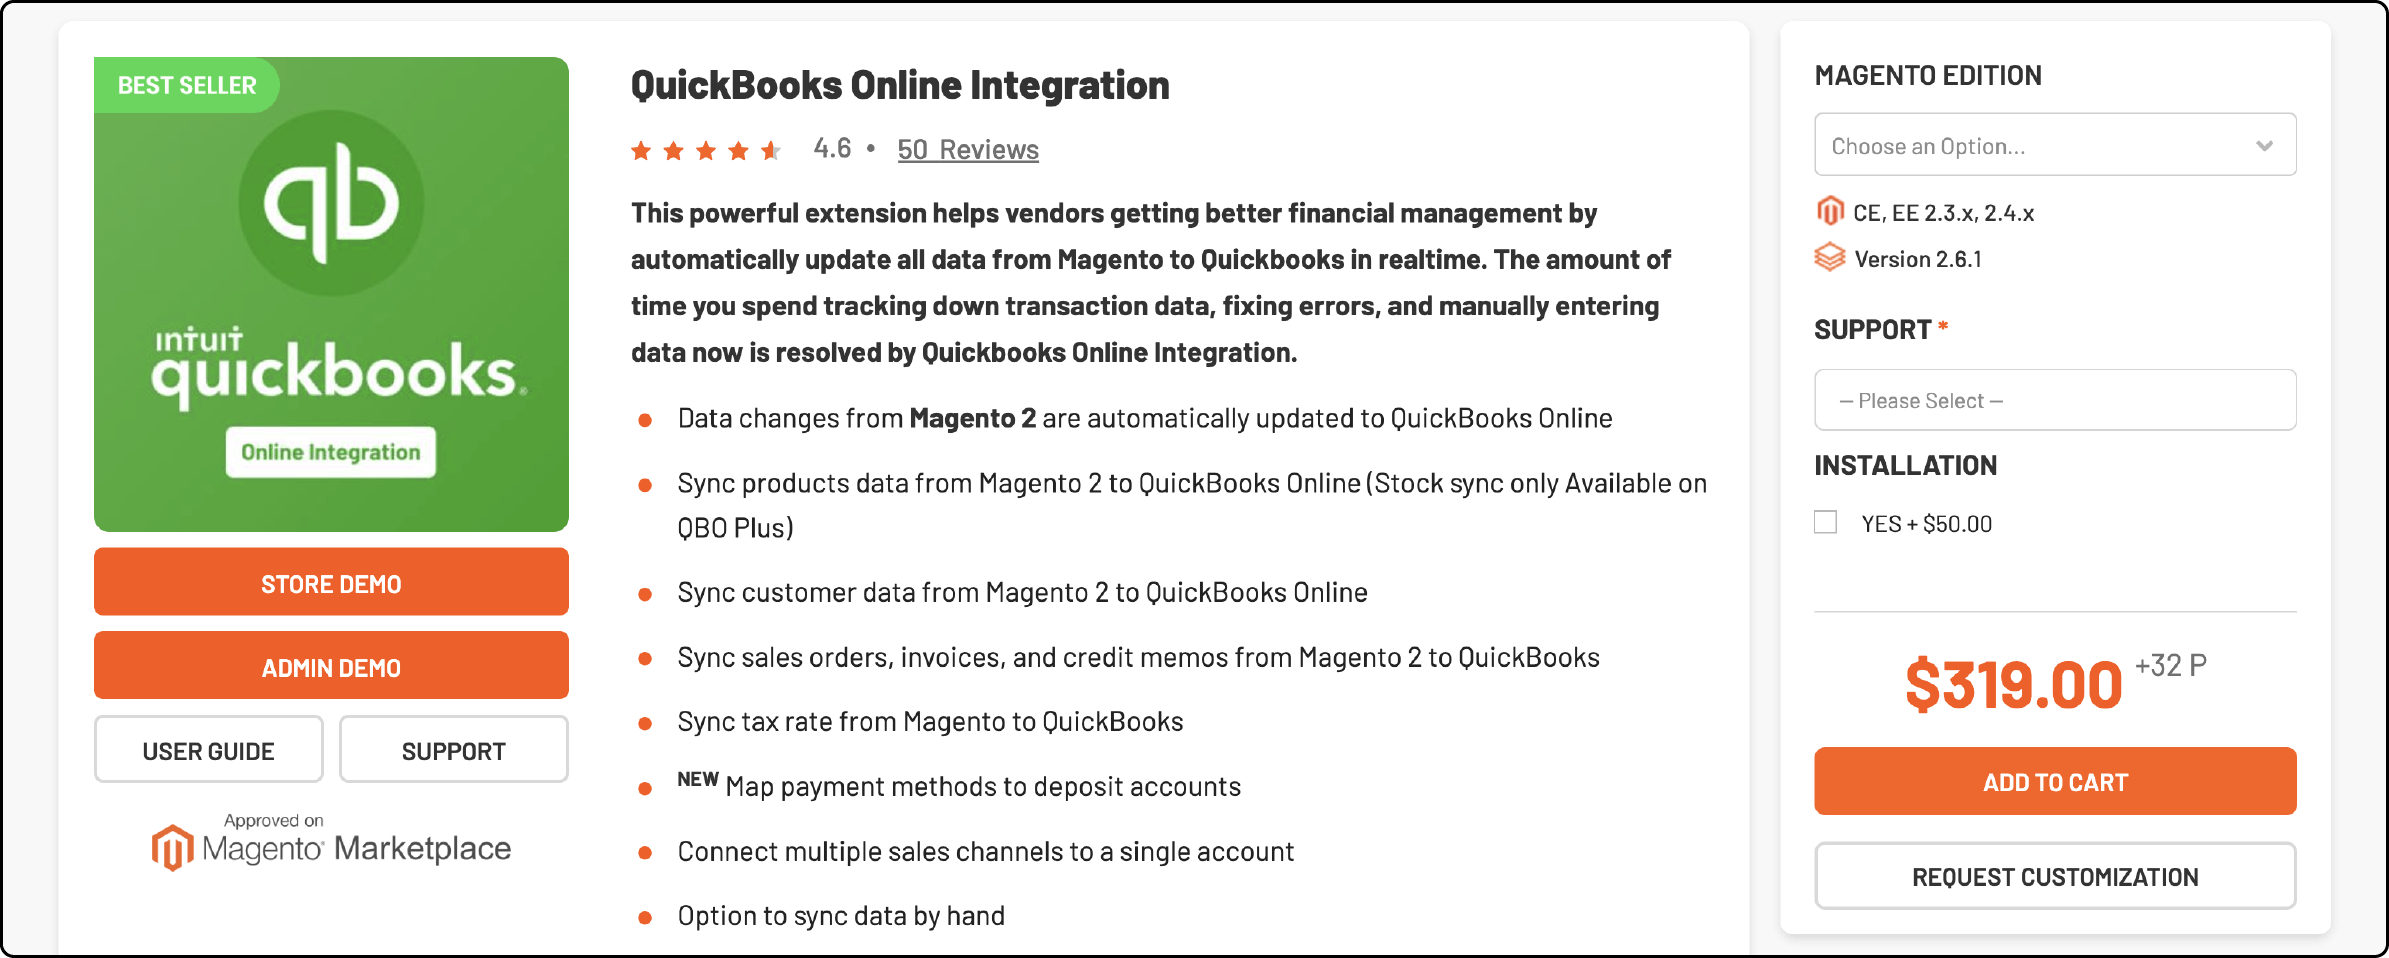 Magenest's QuickBooks Online Integration for Magento